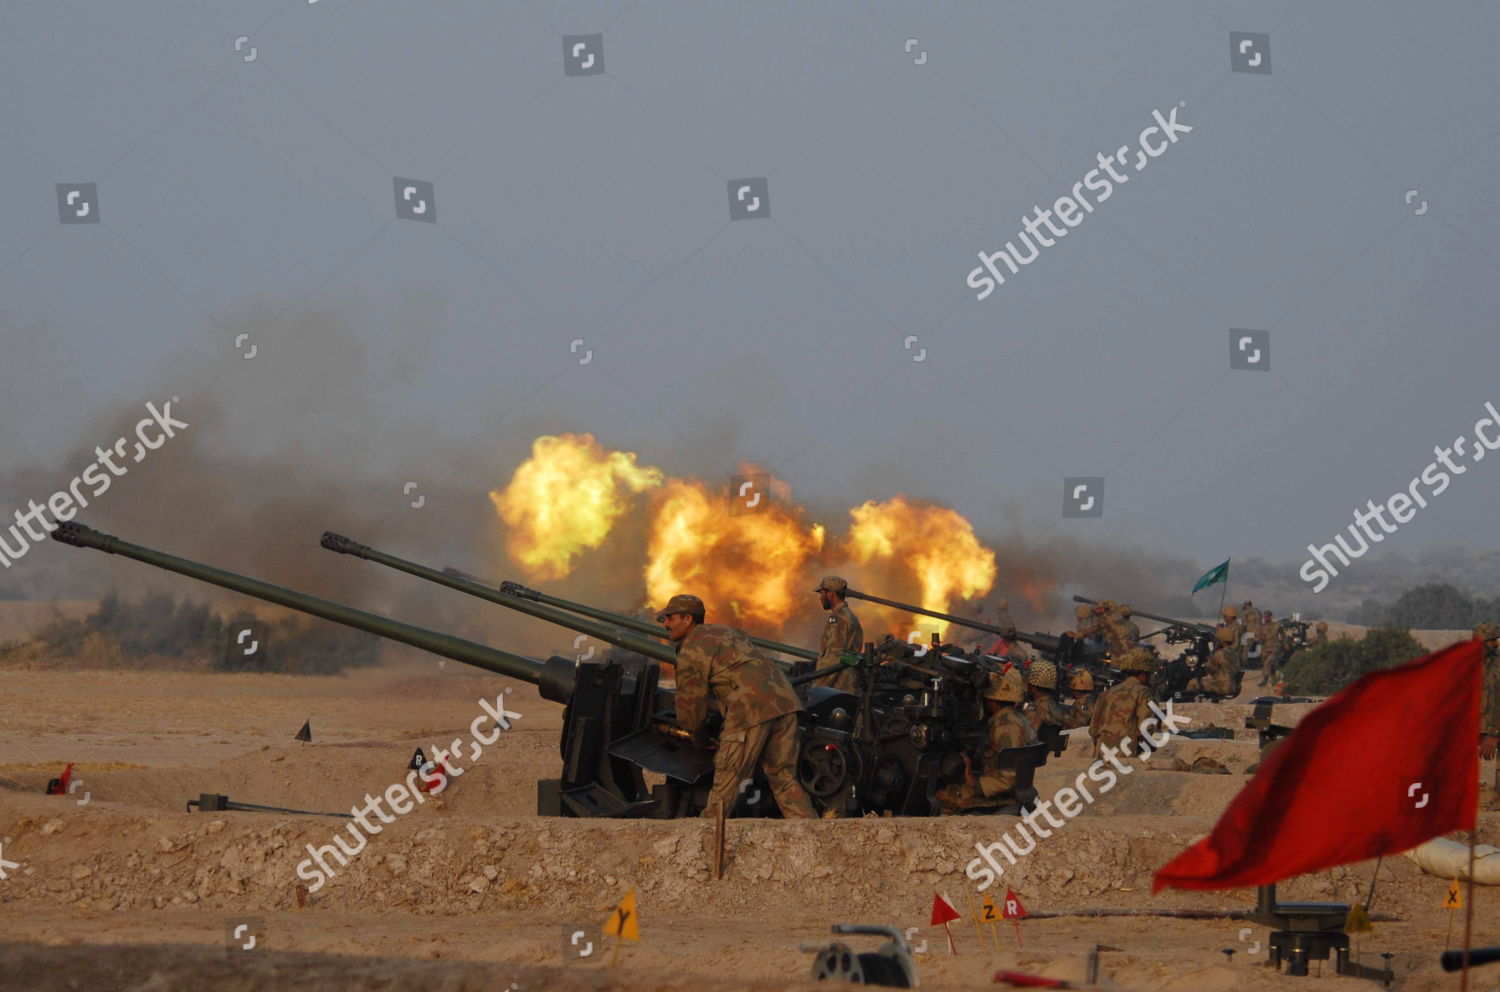 pakistan-military-exercises-jan-2010-shutterstock-editorial-7736850g.jpg